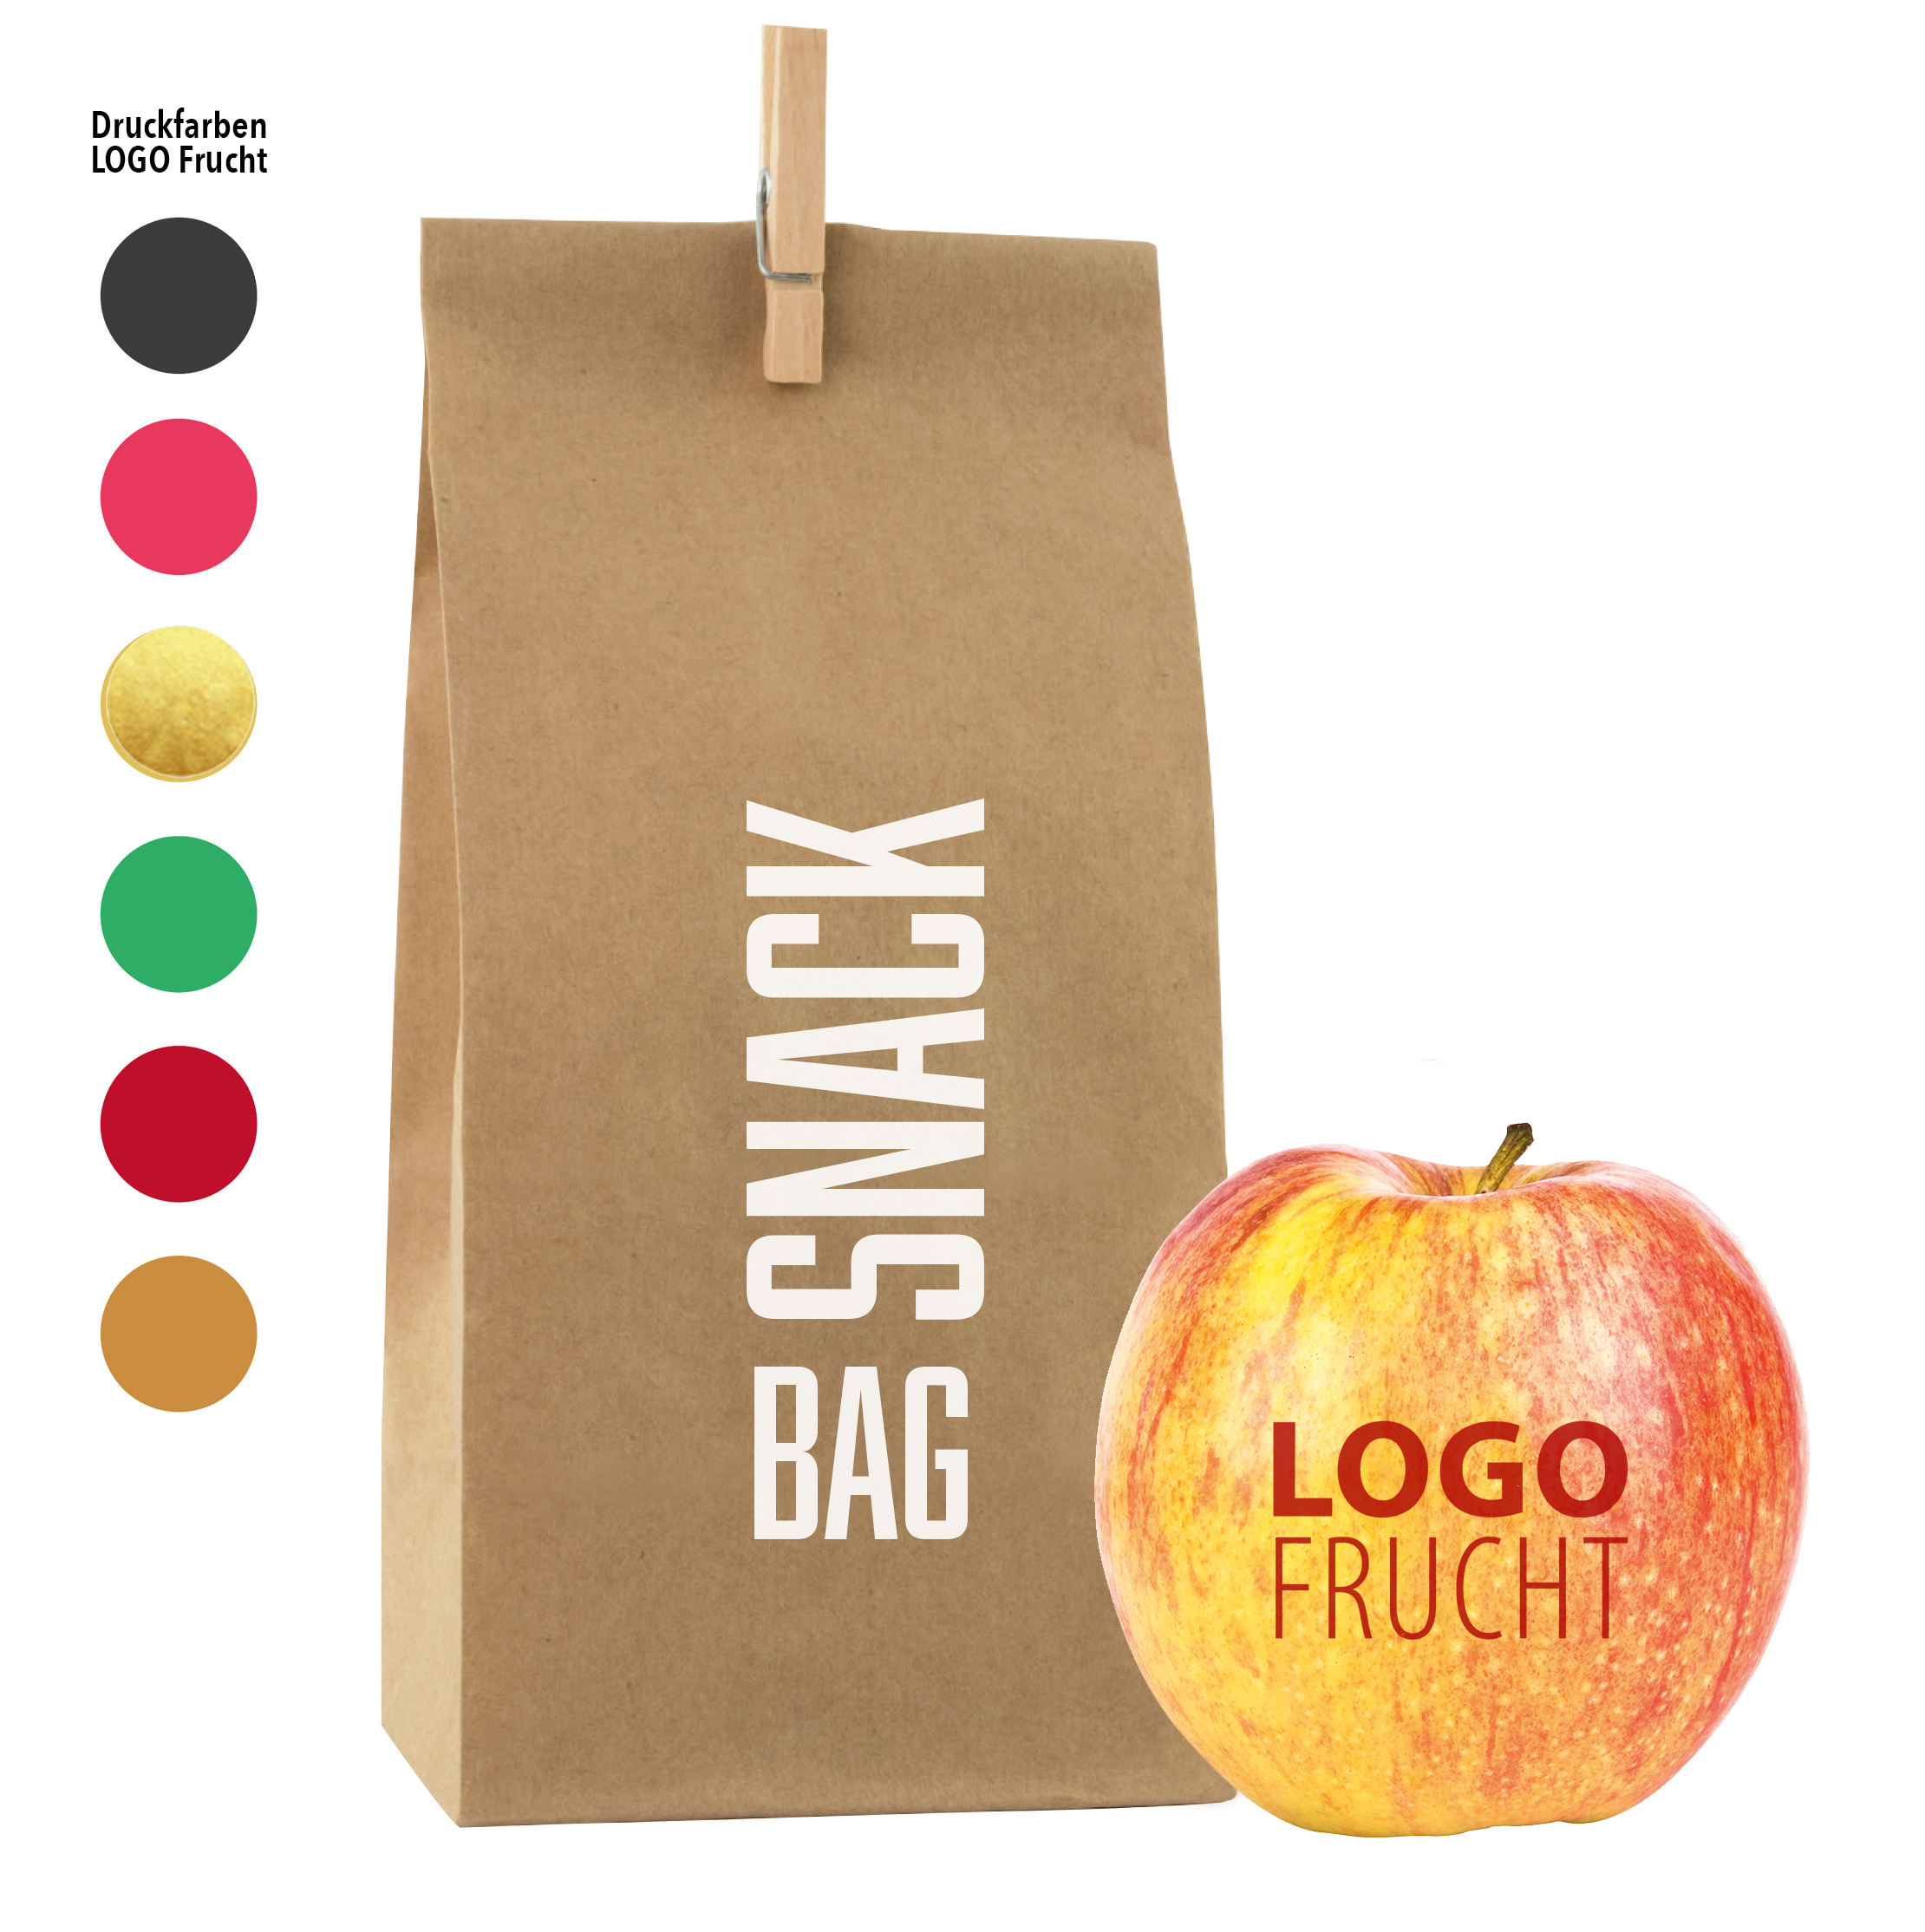 LogoFrucht Apple-Bag